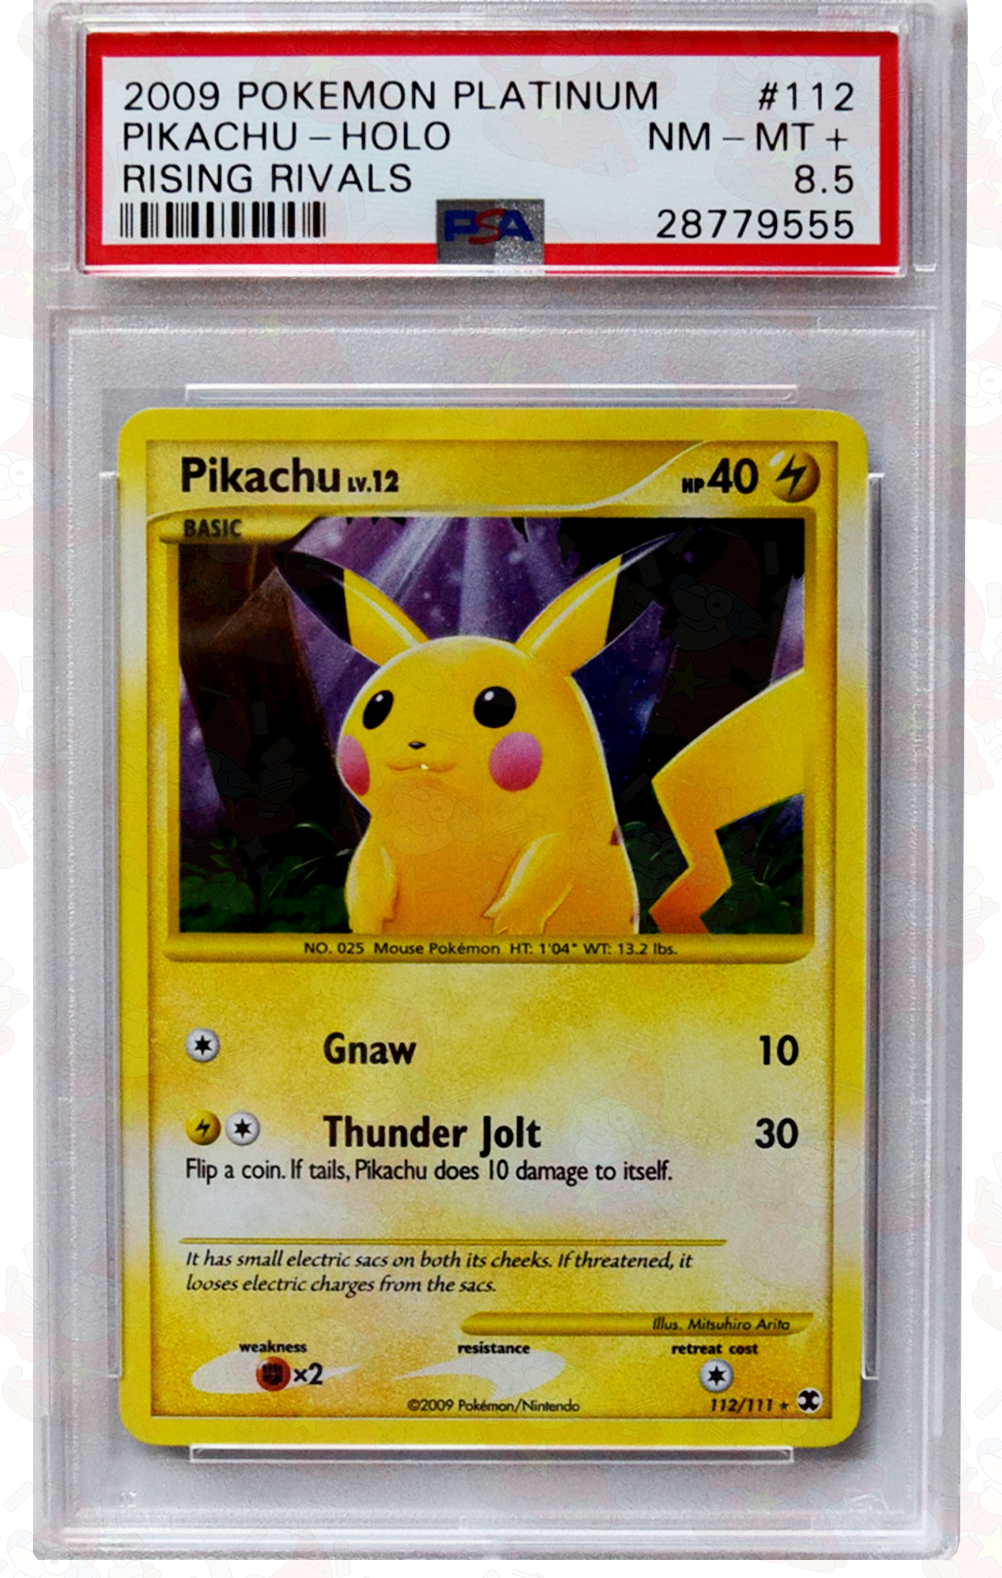 2009 Pokemon Platinum - Pikachu (#112) - Holo - Rising Rivals - PSA 8.5 NM - MT